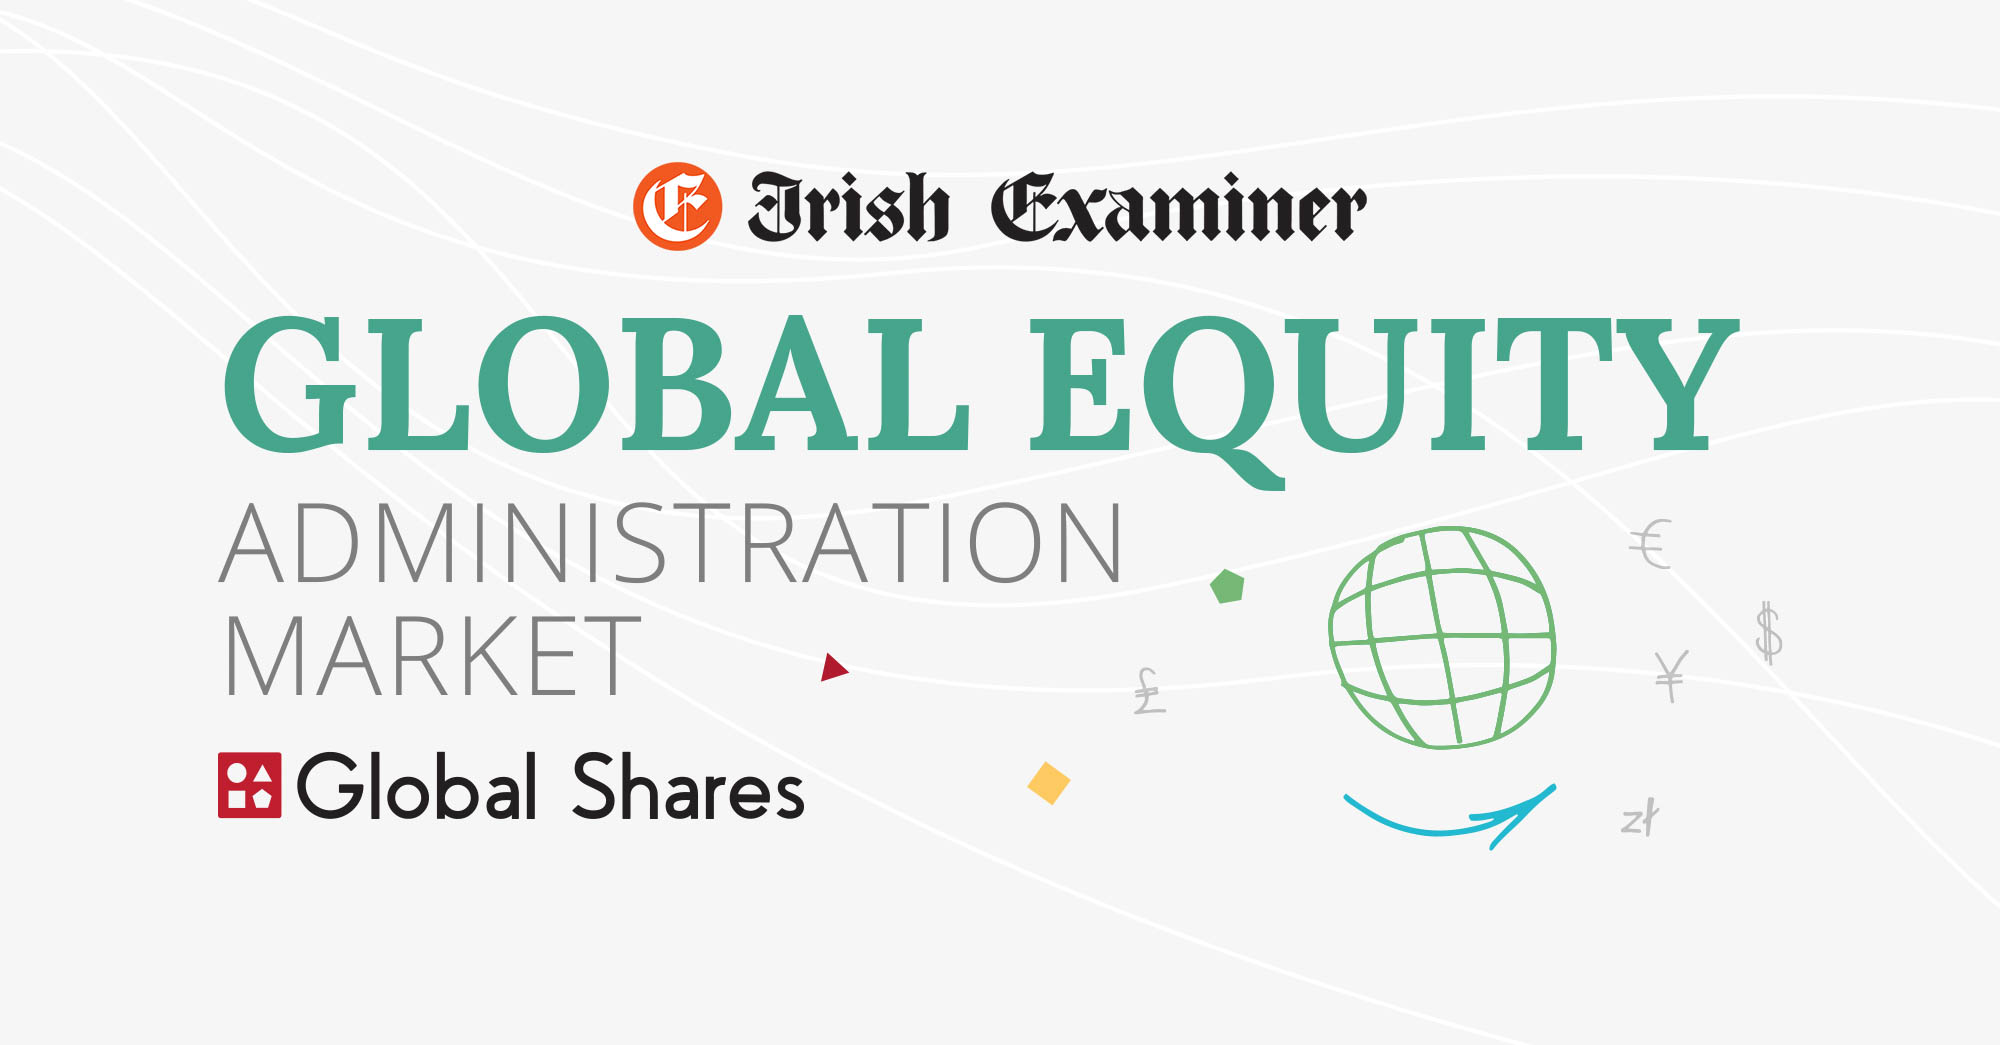 Irish Examiner press feature on Global Shares